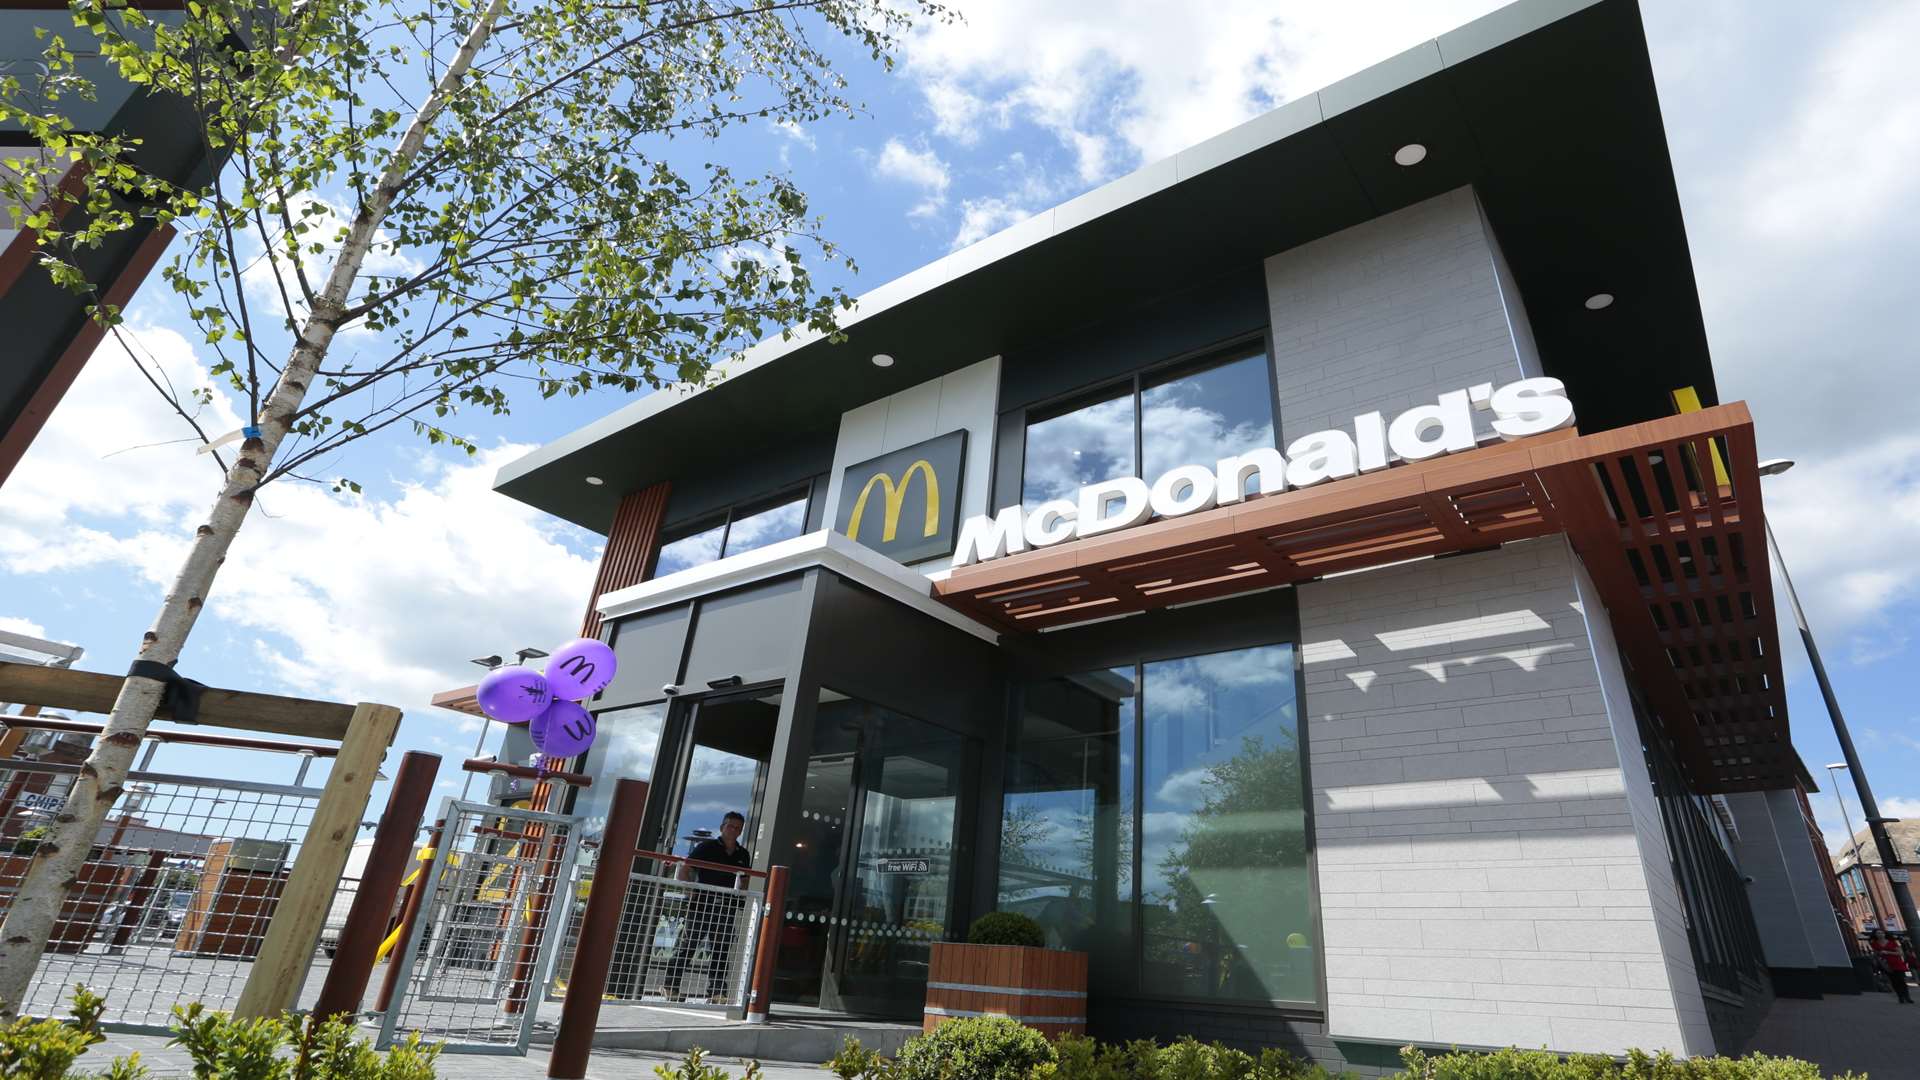 The new McDonald's